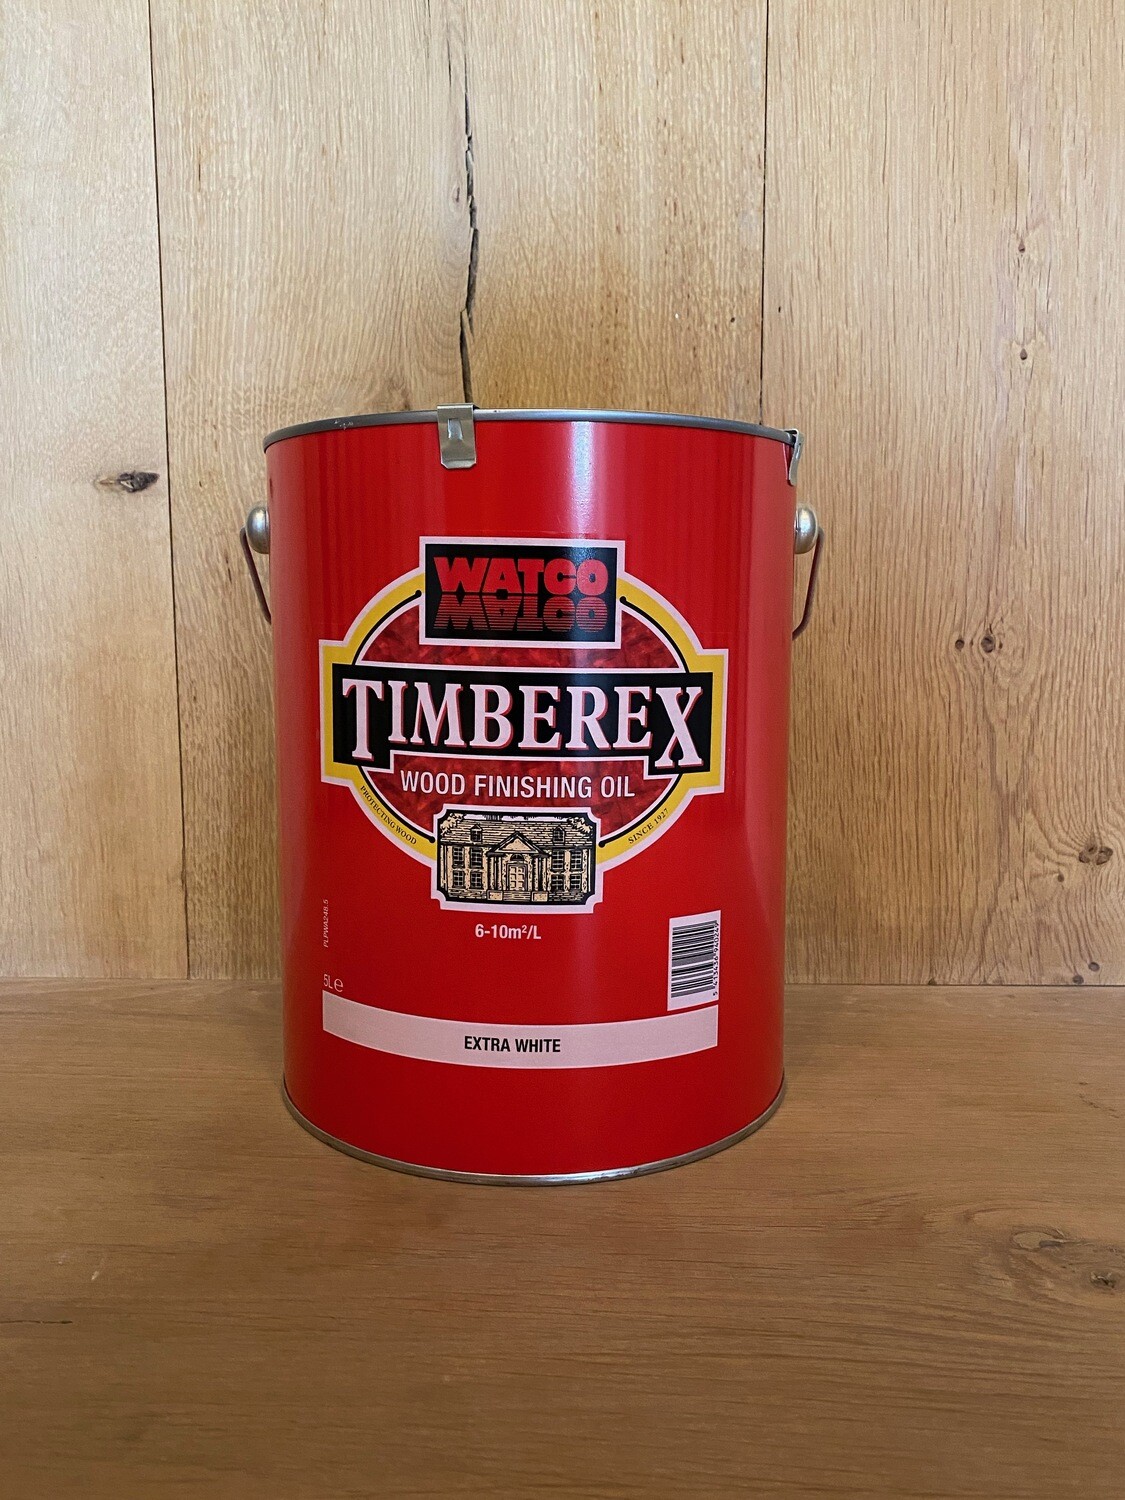 Timberex wood finishing oil, extra white